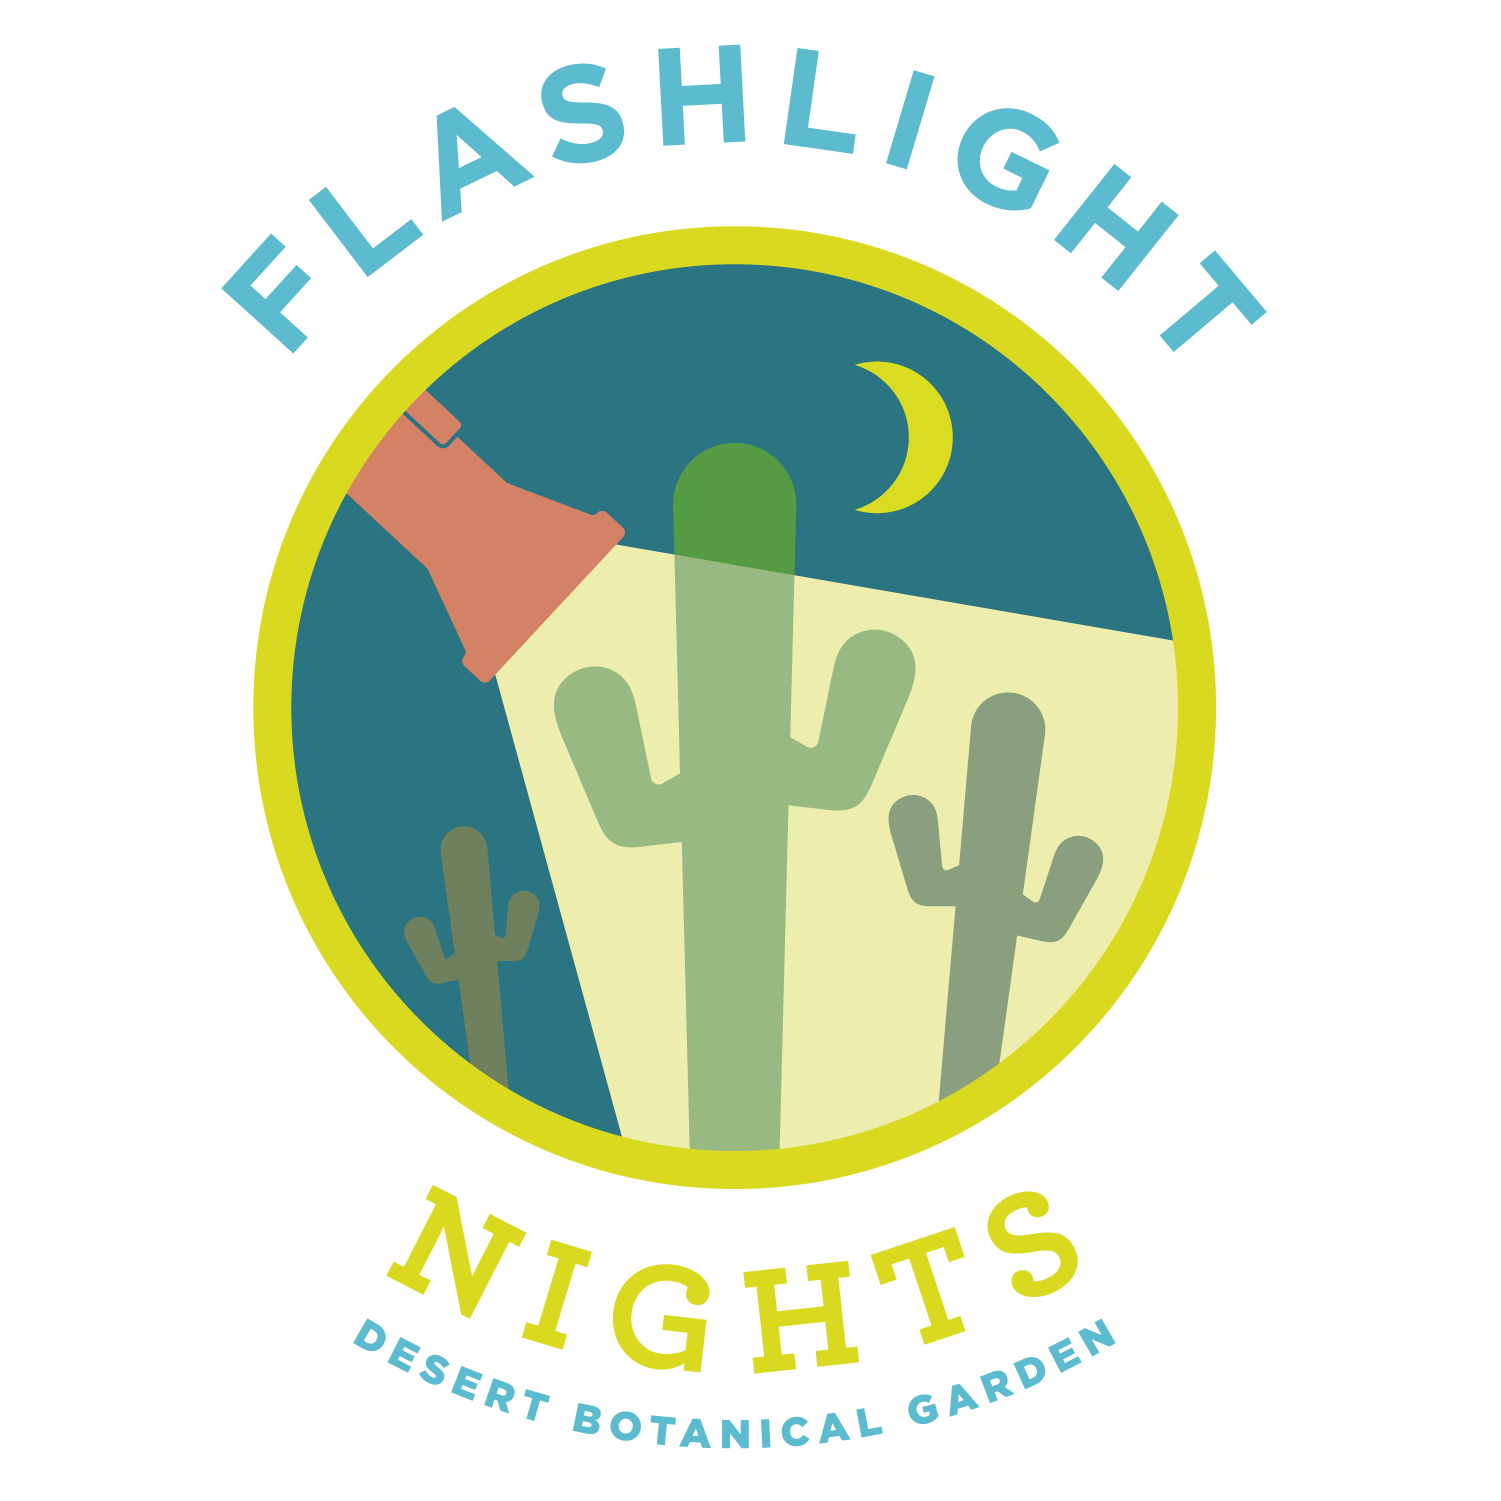 Flashlight Nights at Desert Botanical Garden logo